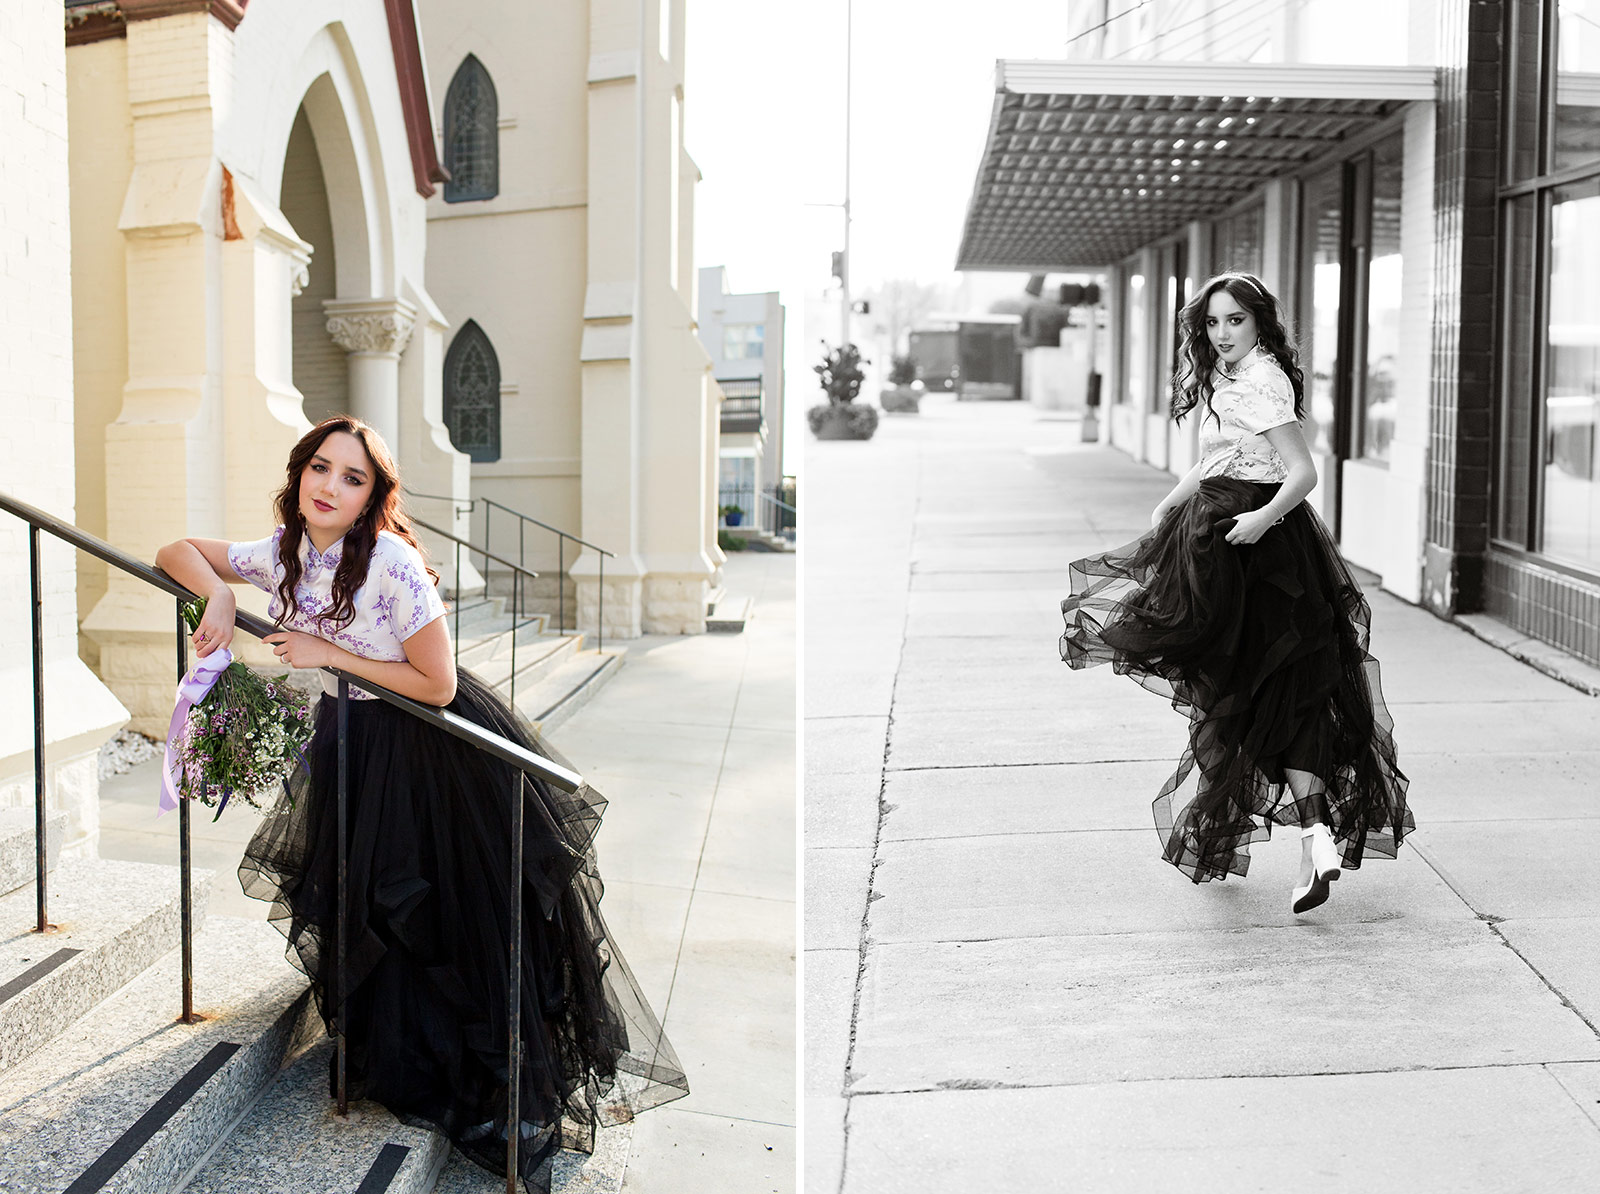 Bella leans dramatically on a church railing, and runs along a downtown street.